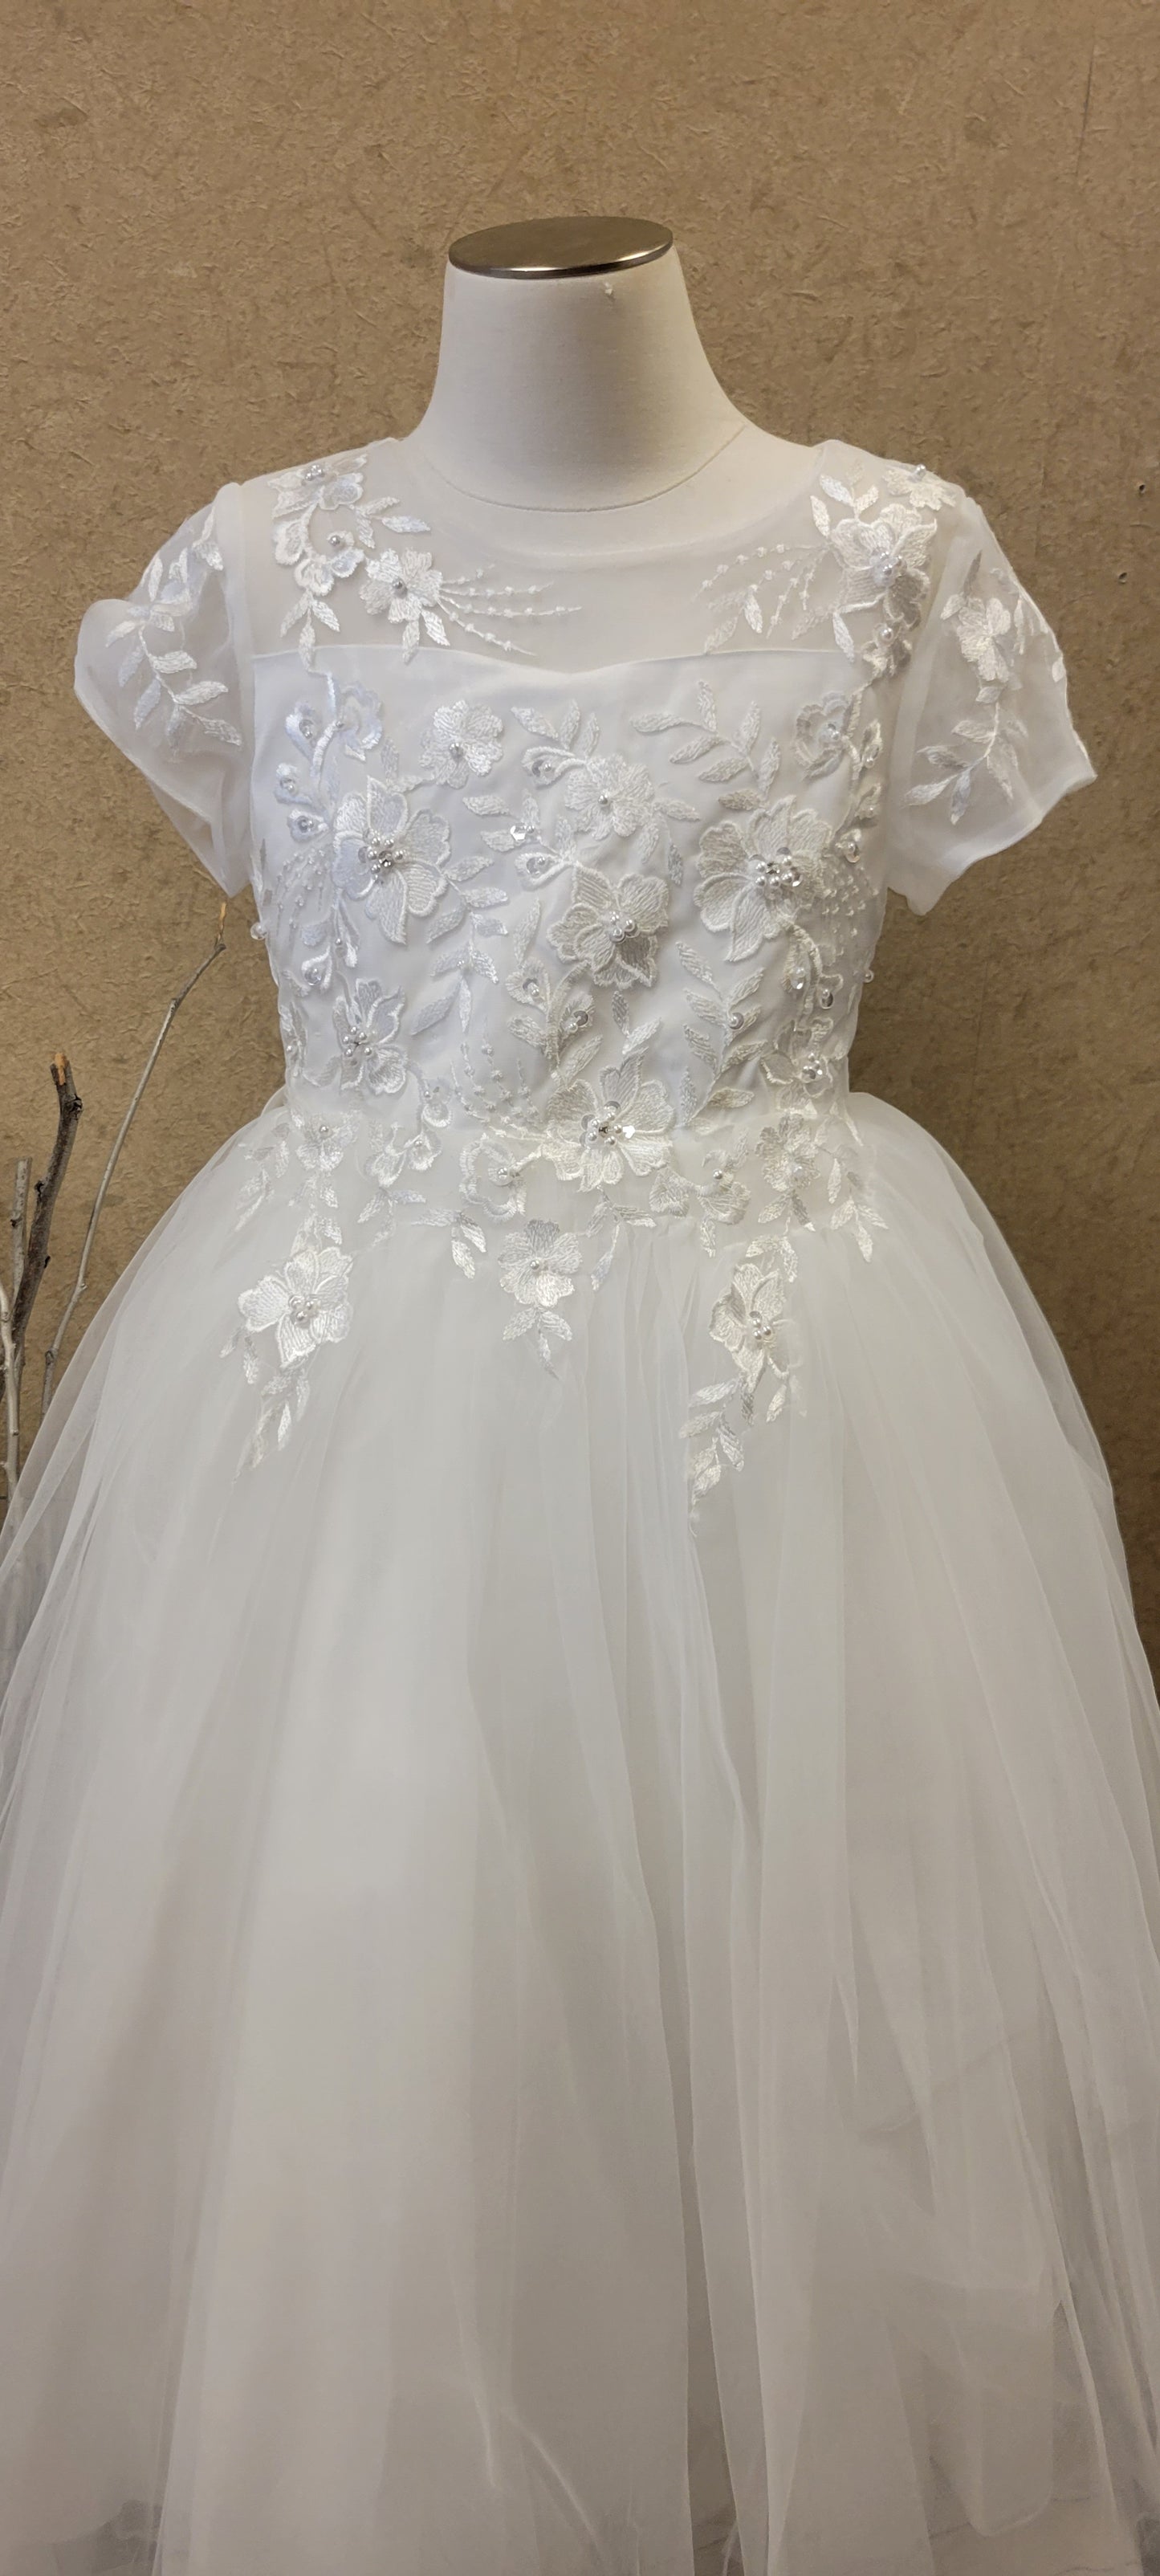 First Holy Communion Dress/vestido de primera comunion white 5833